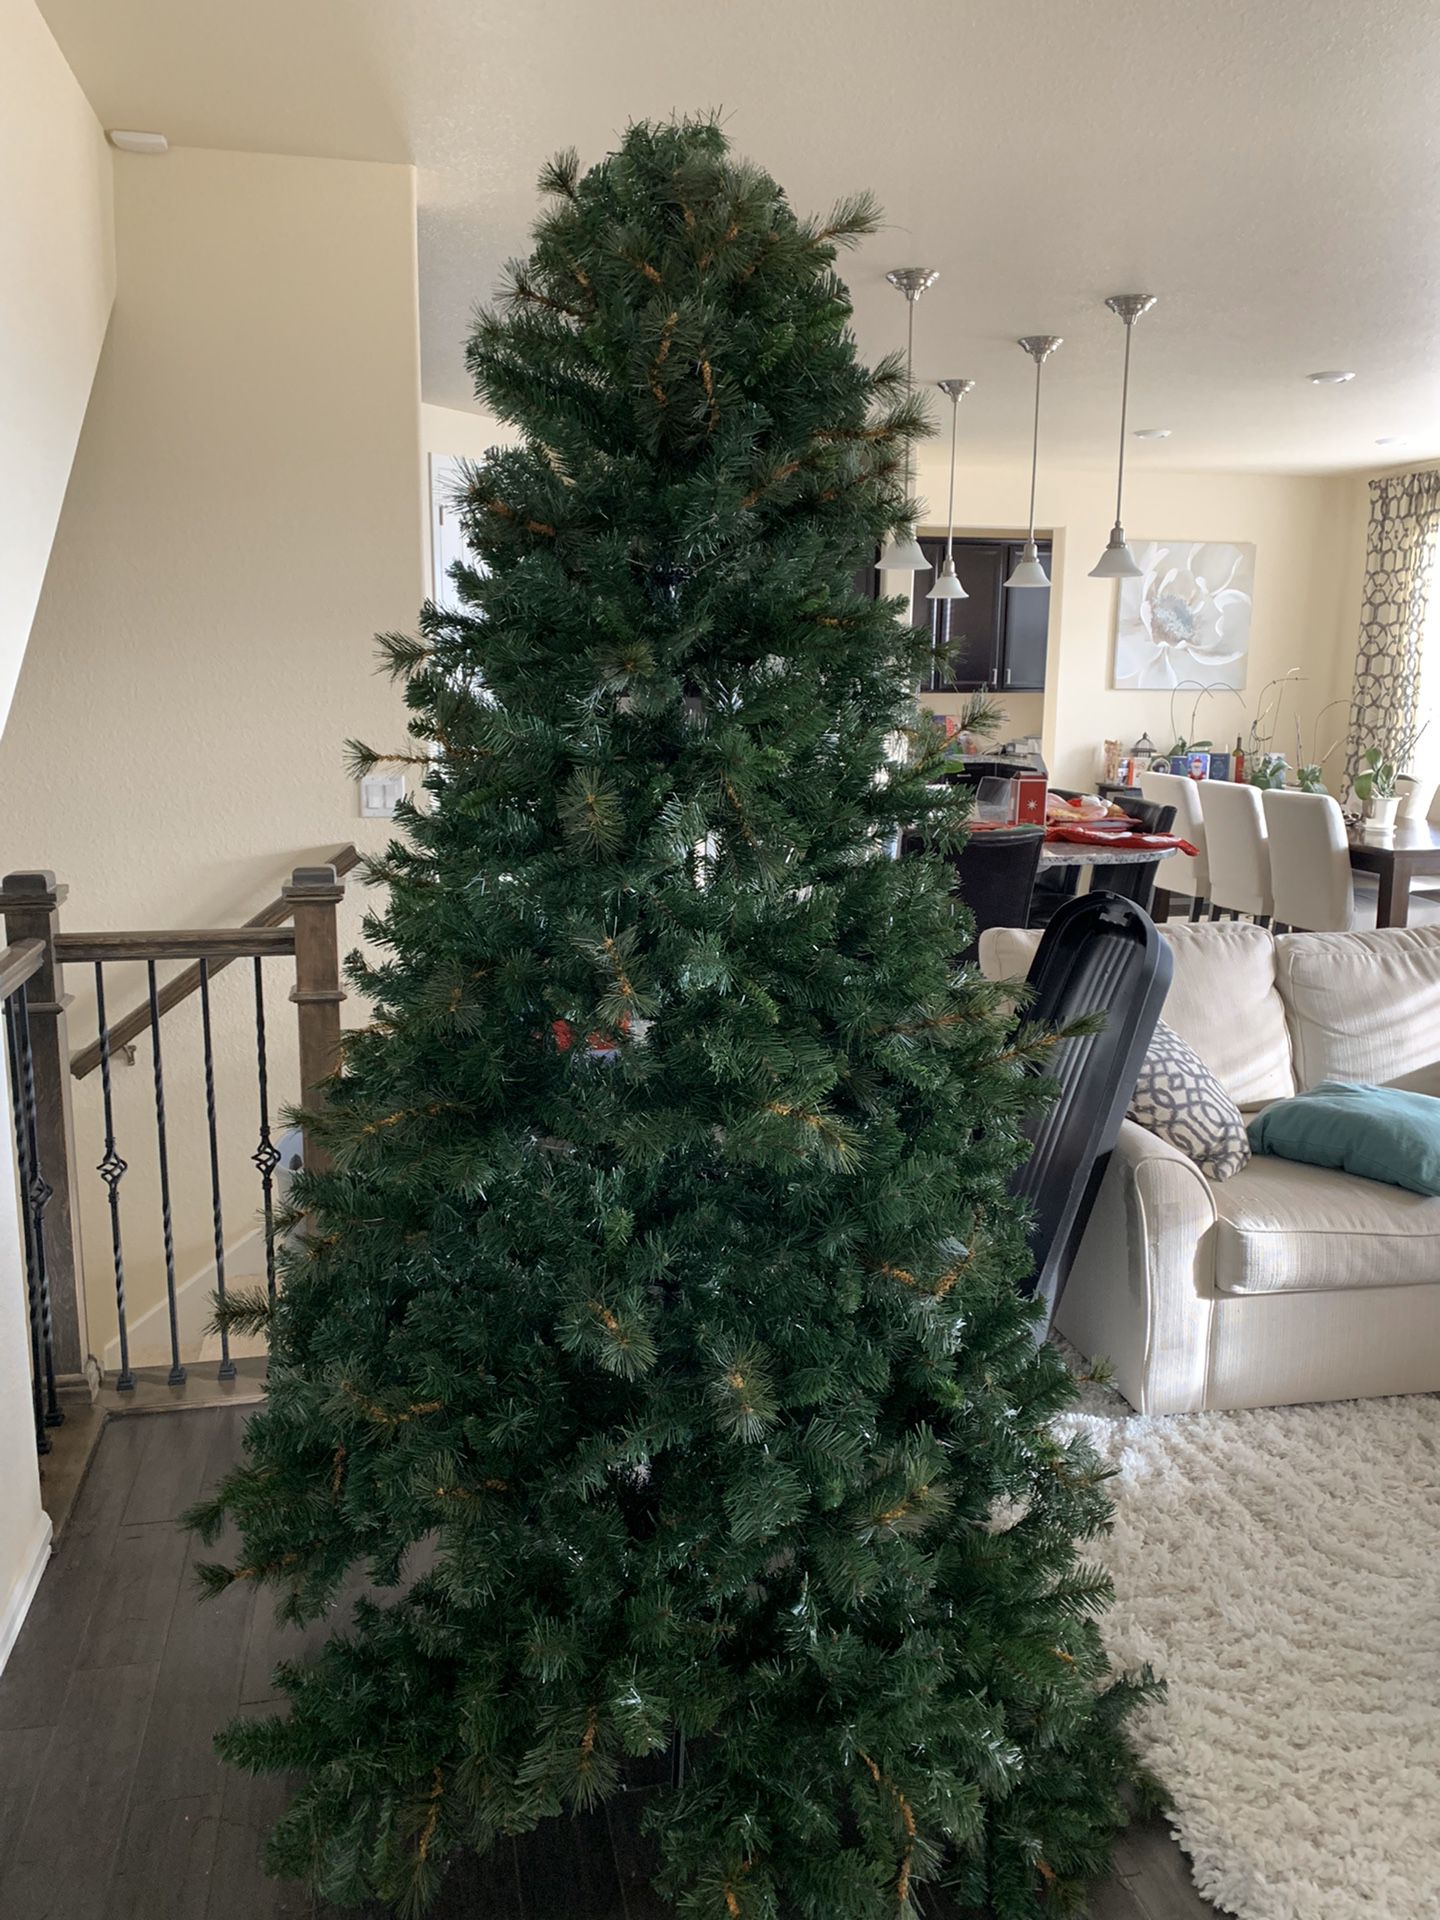 Artificial Christmas tree